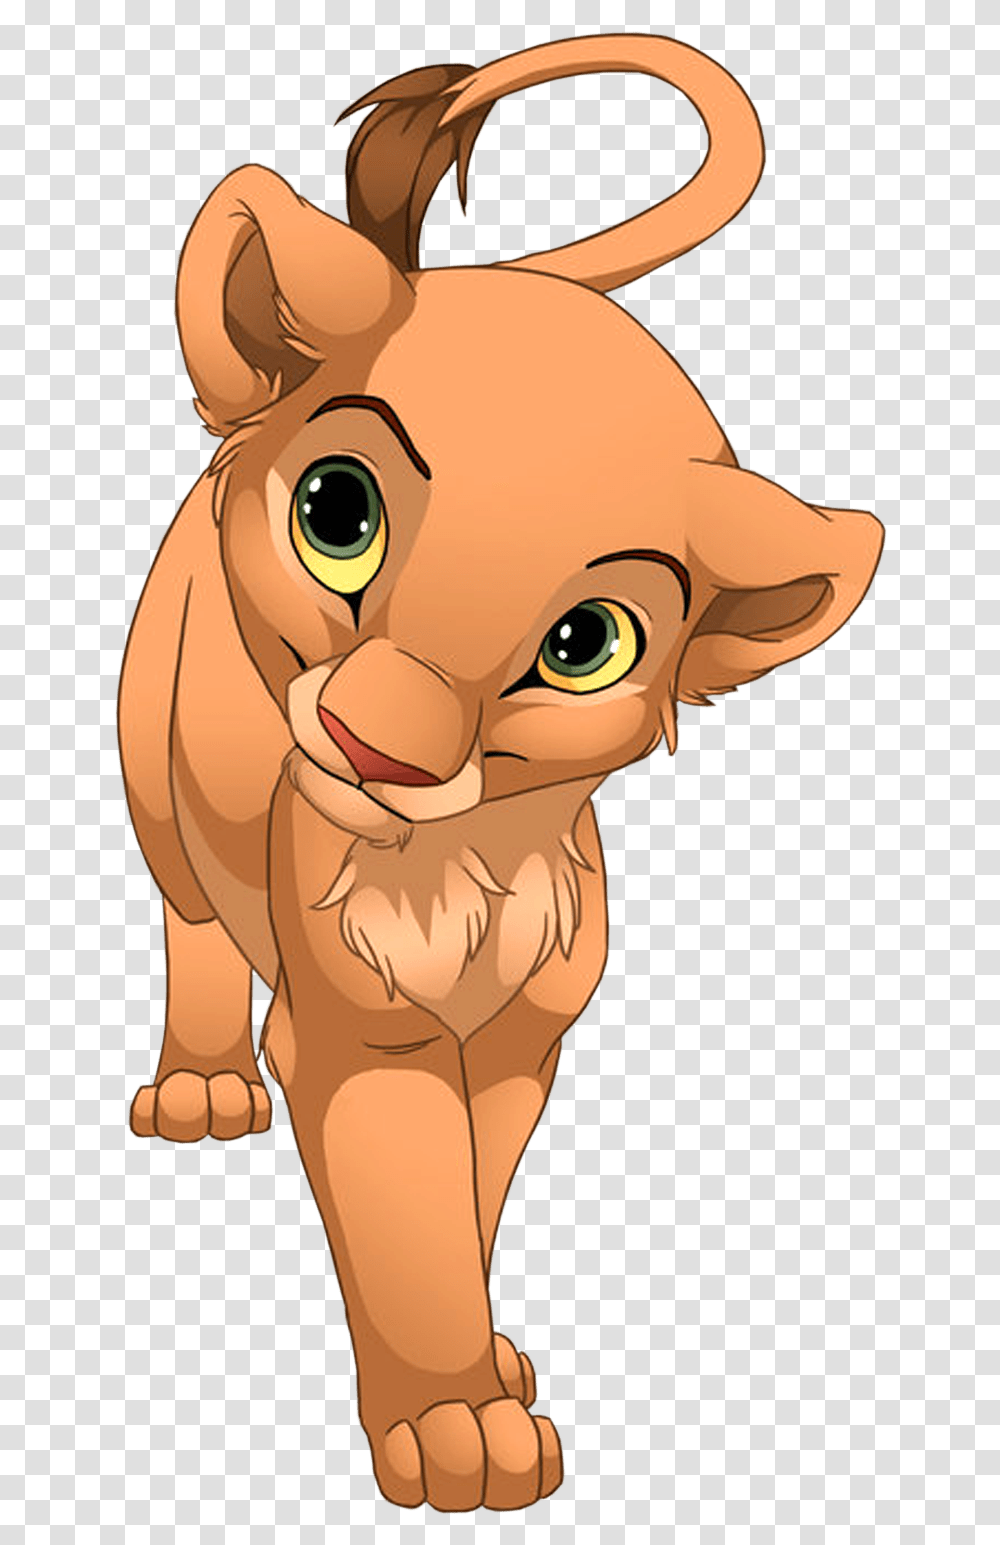 Lion King Images Free Nala Lion King Cartoon, Mammal, Animal, Pet, Cat Transparent Png